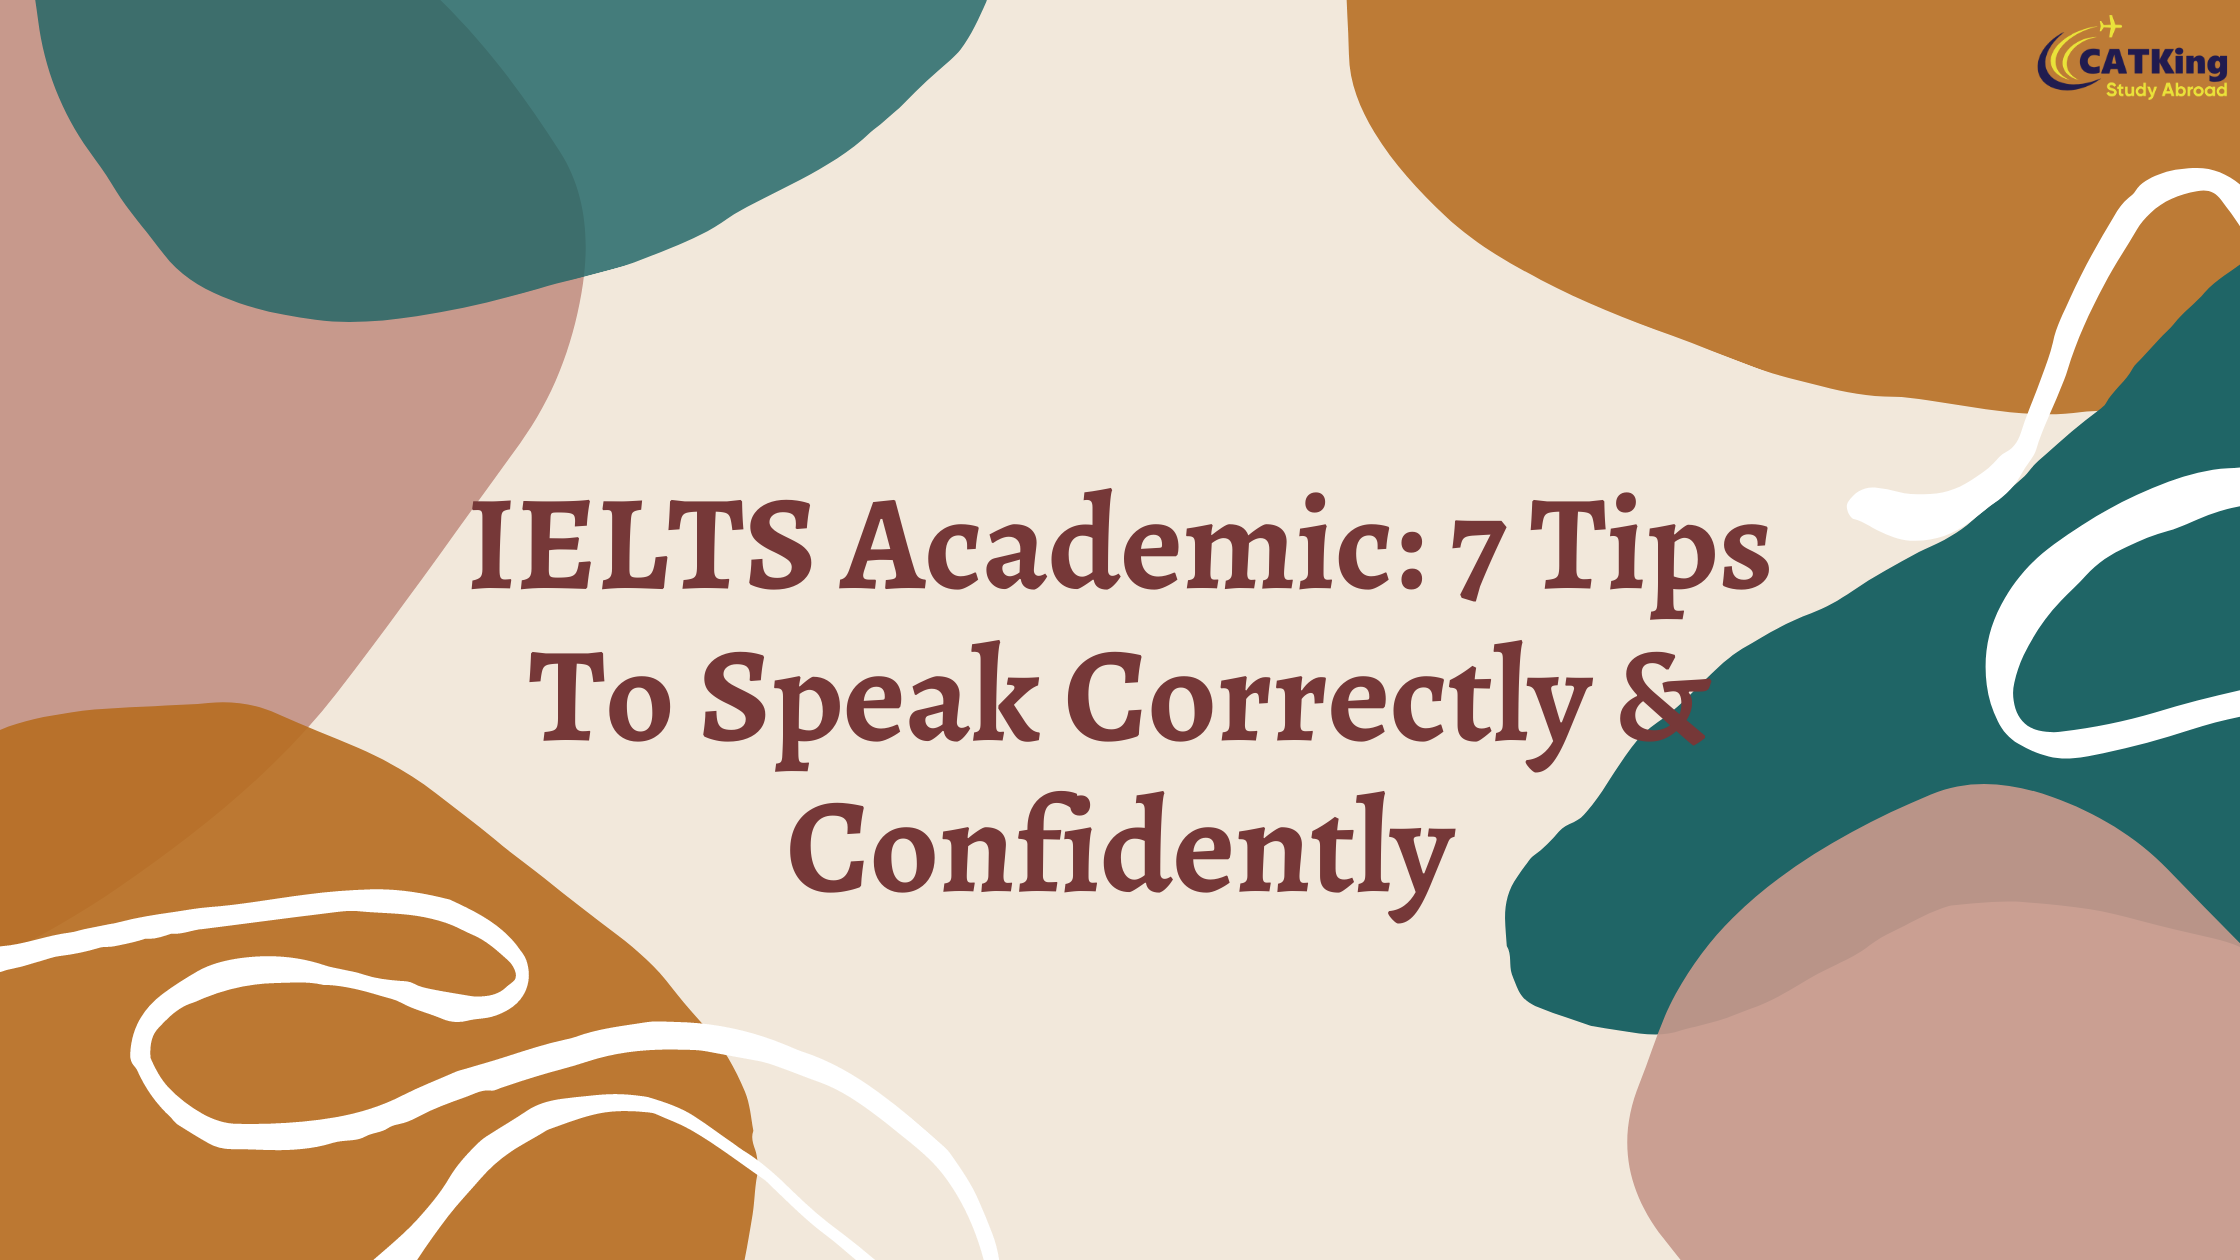 IELTS Academic: 7 Tips To Speak Correctly & Confidently